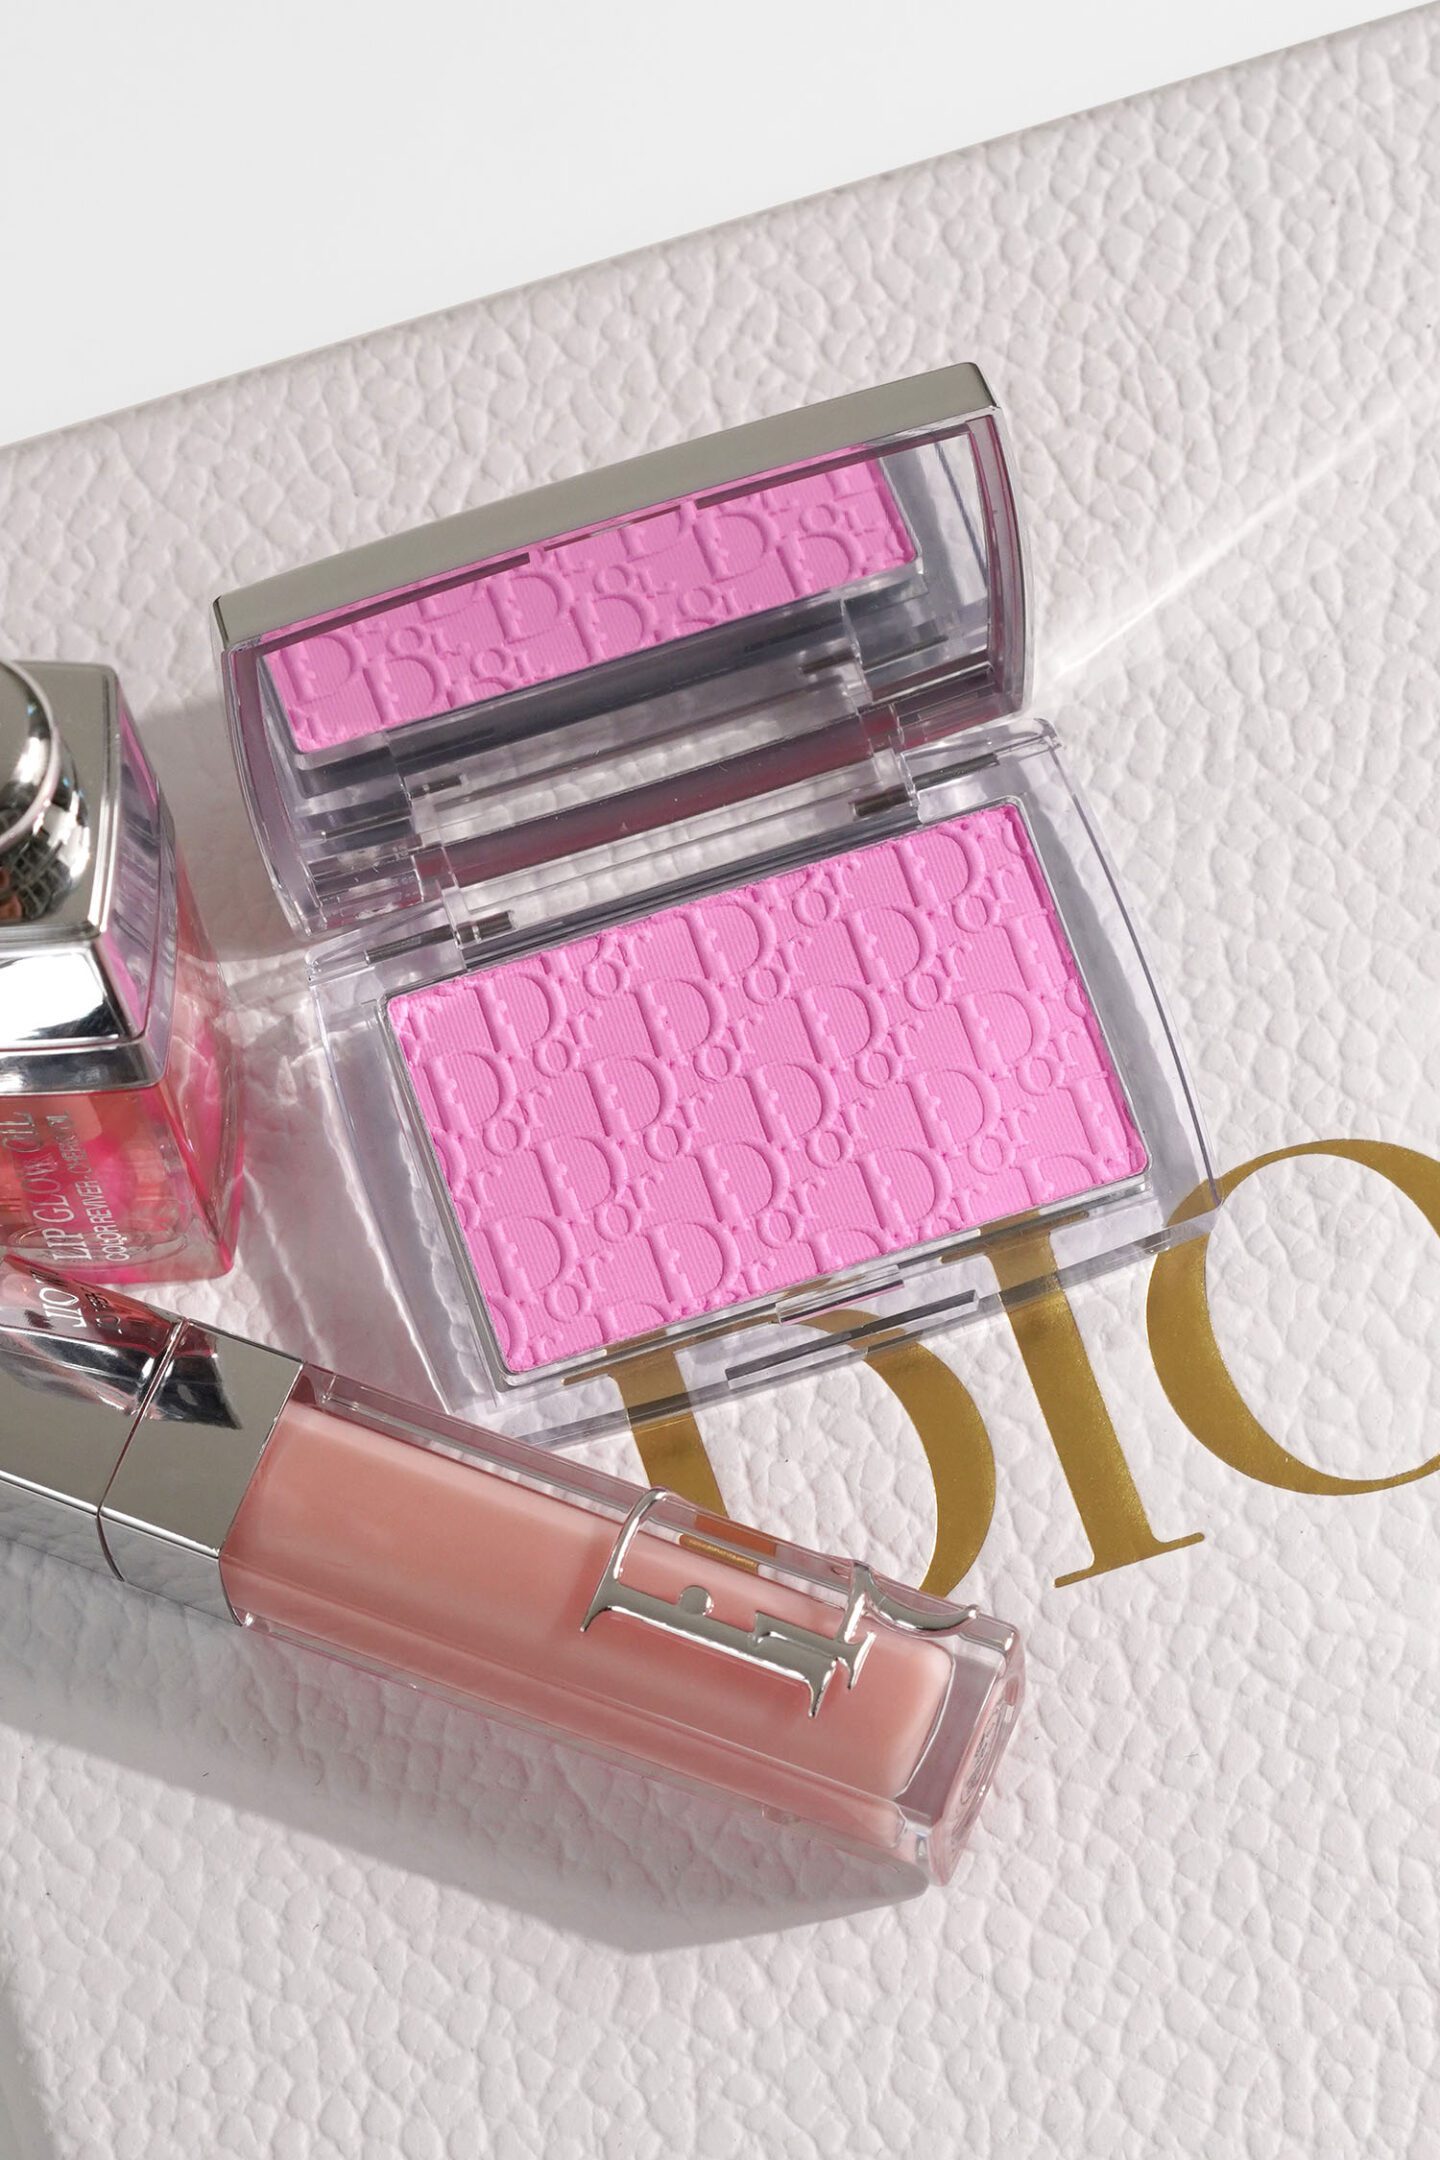 Dior Rosy Glow Blush Pink